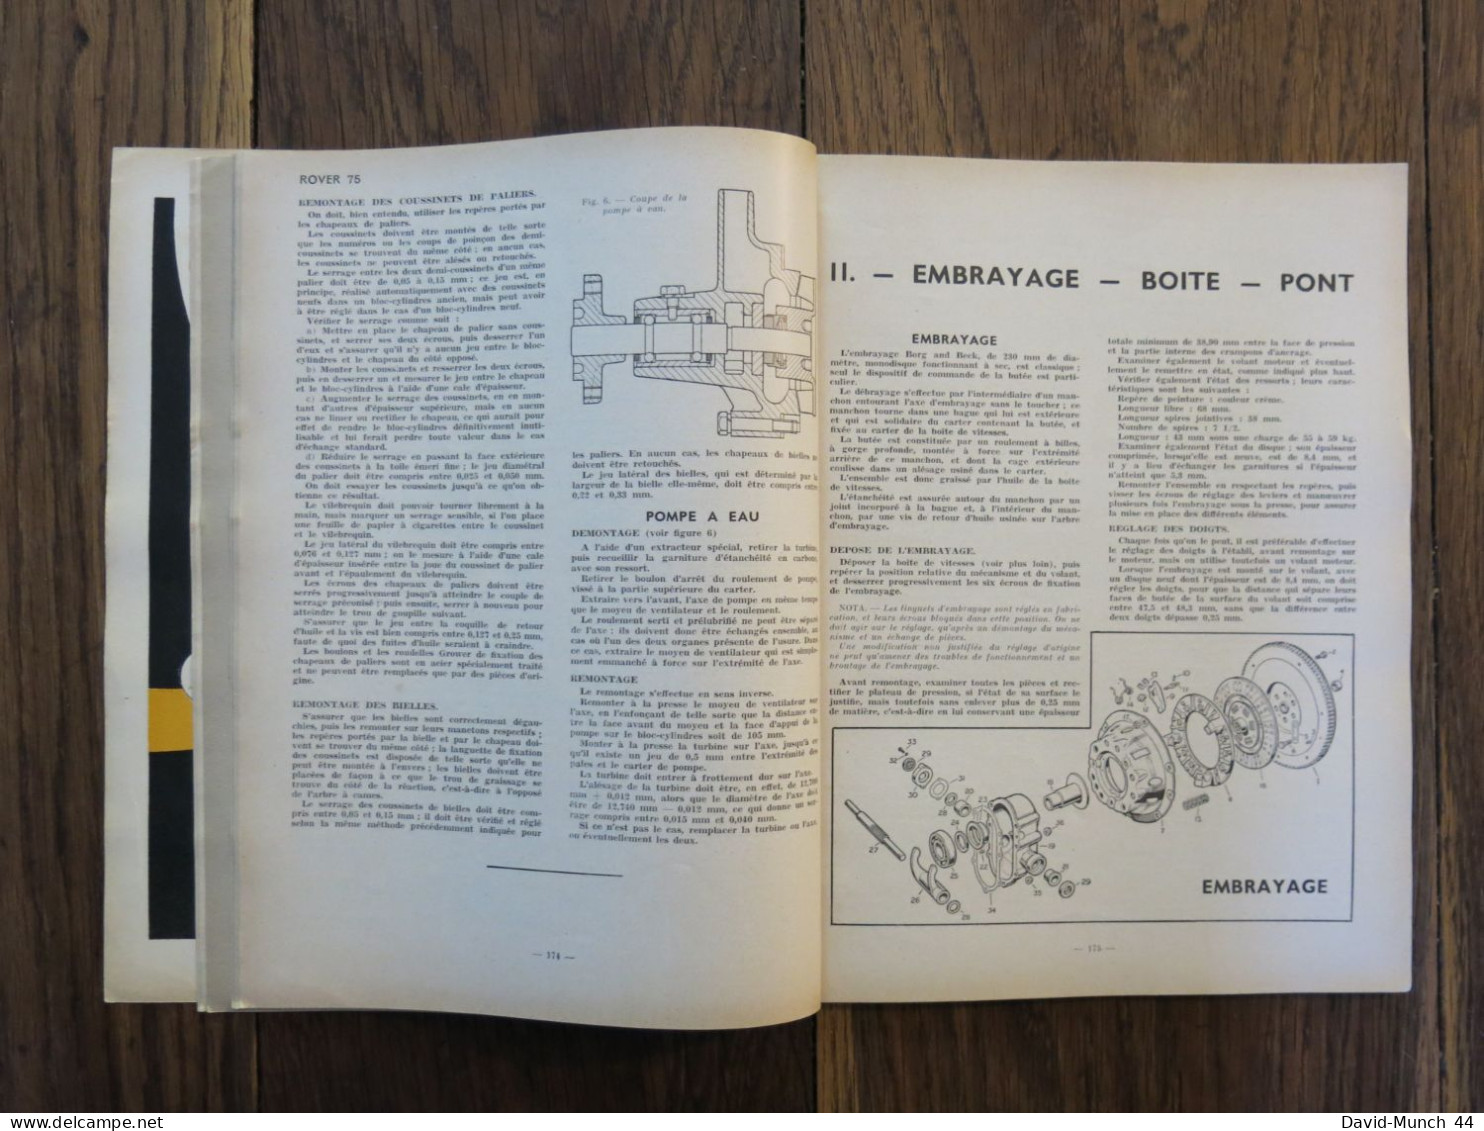 Revue technique Automobile # 95. Mars 1954